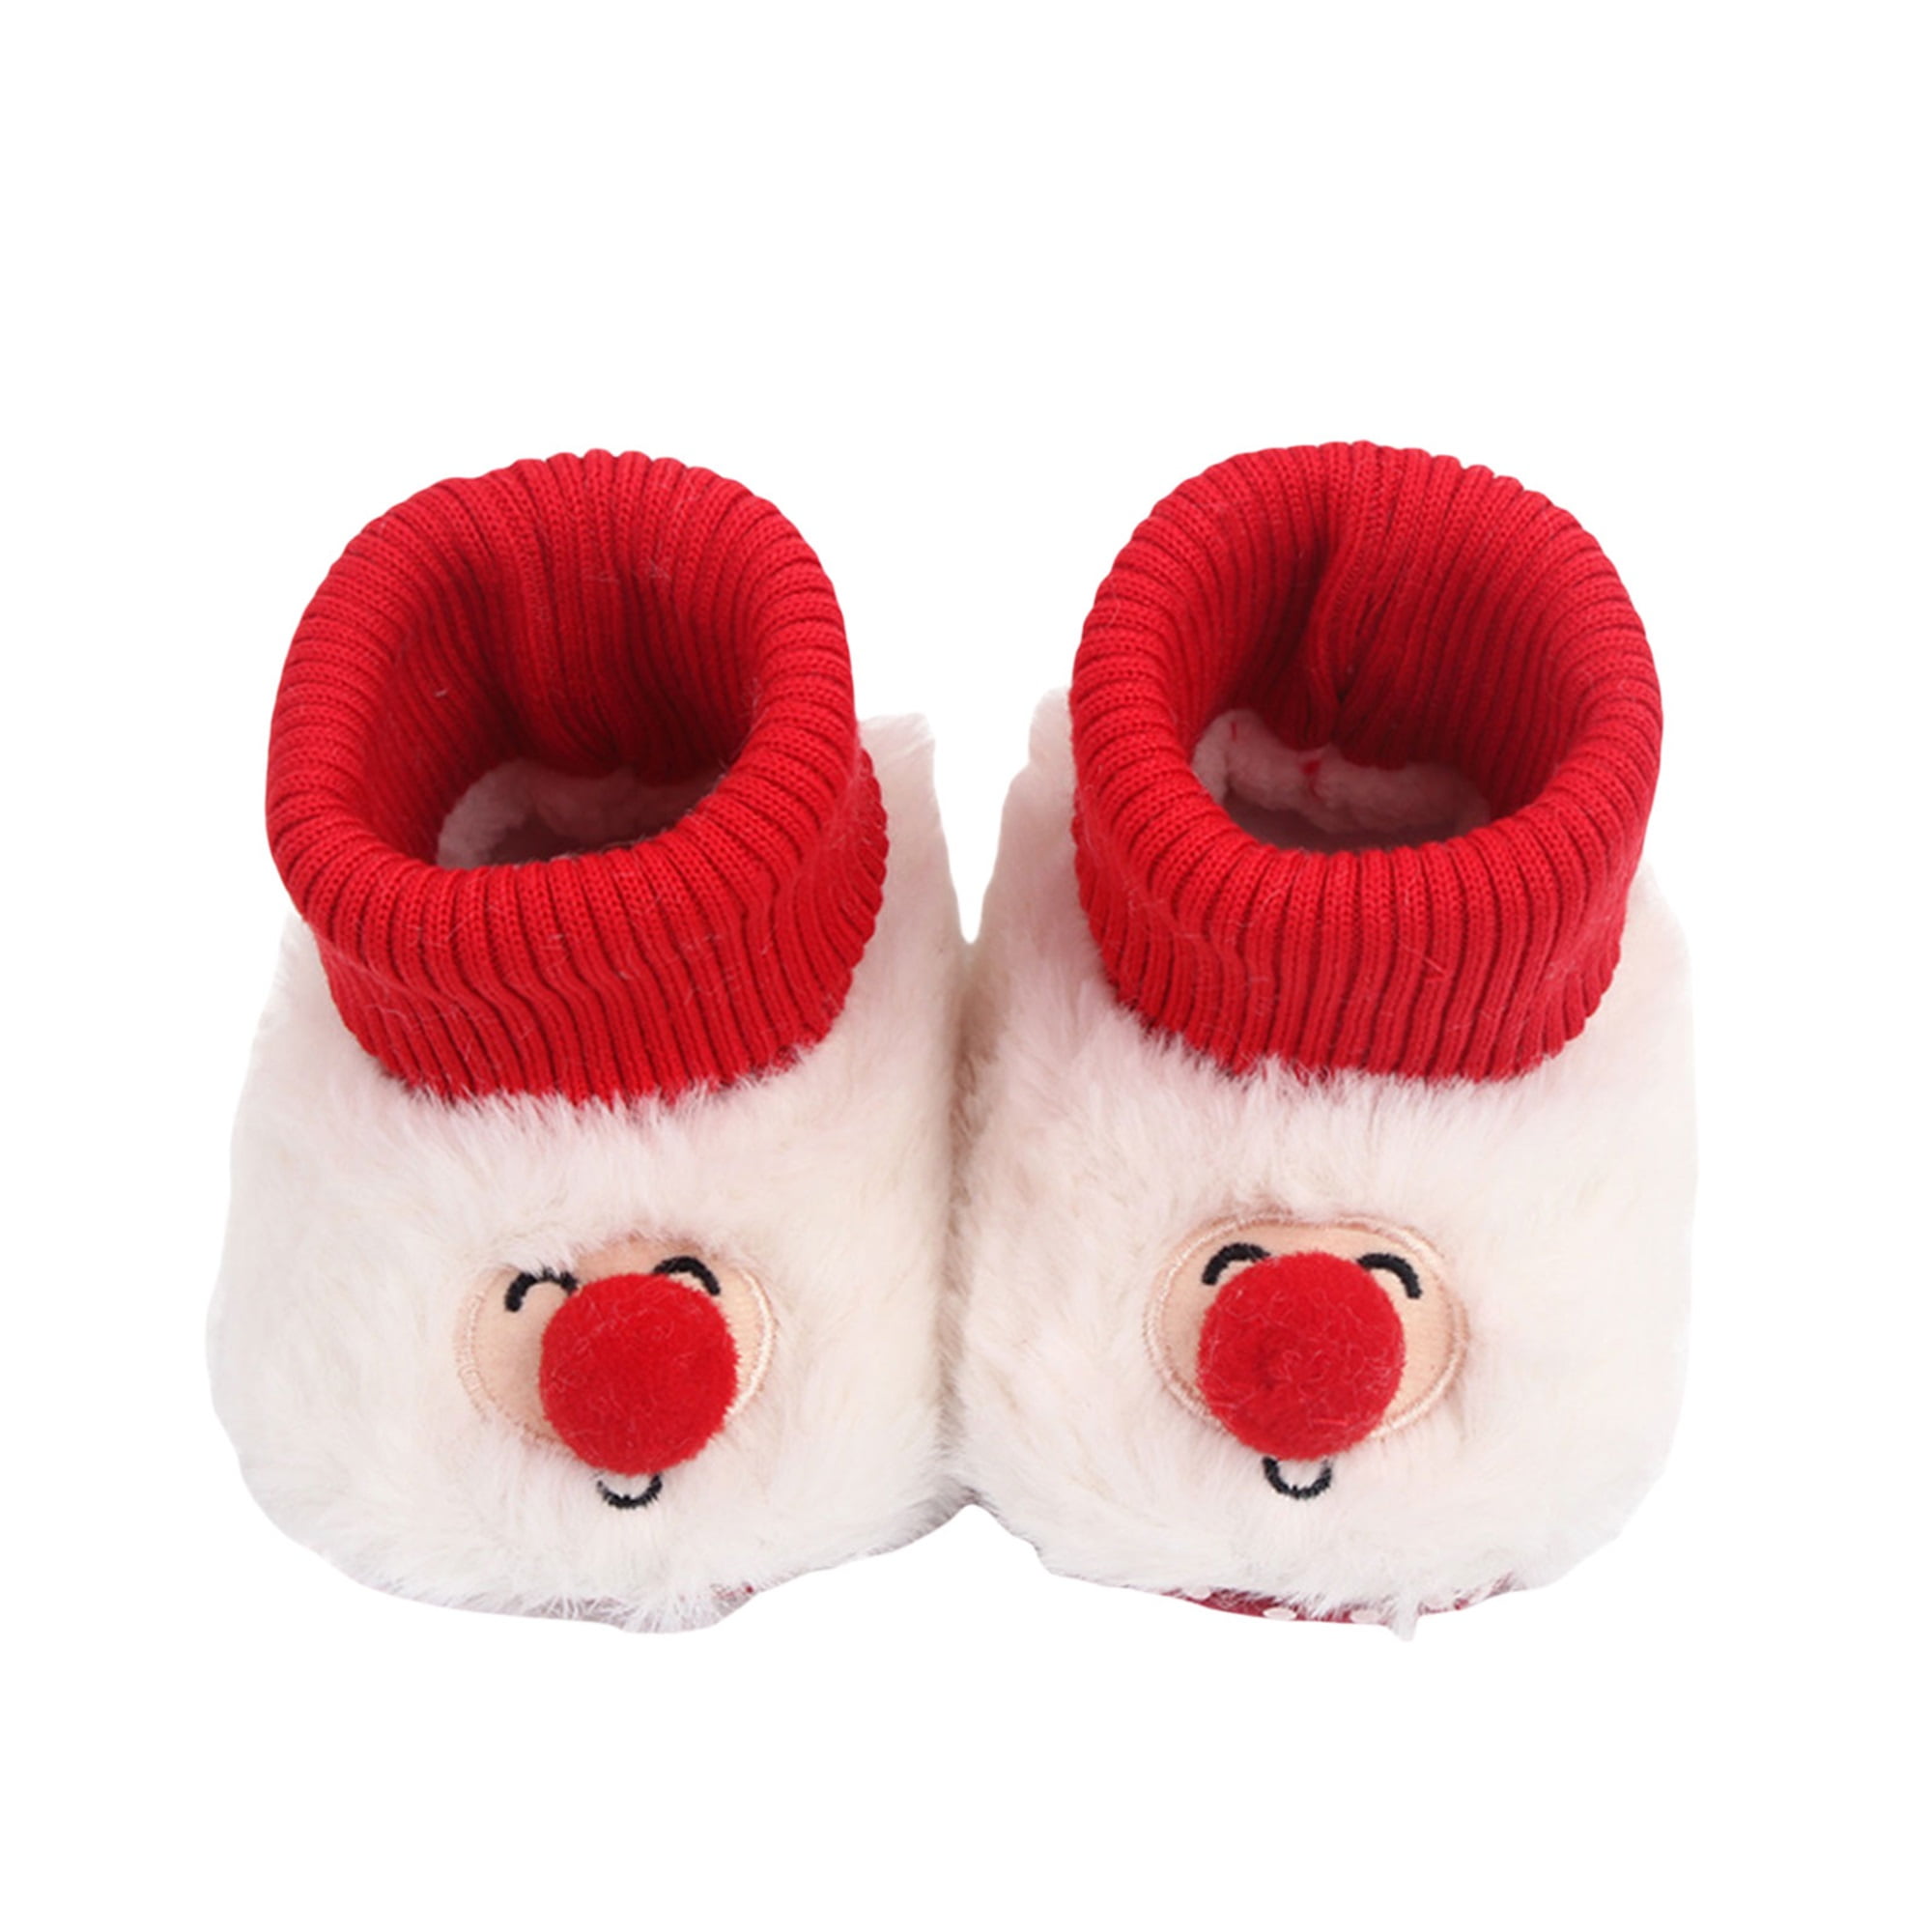 Infant Baby Girls Boys Christmas Slippers Warm Baby Socks Shoes Crib Shoes Footwear Prewalkers -